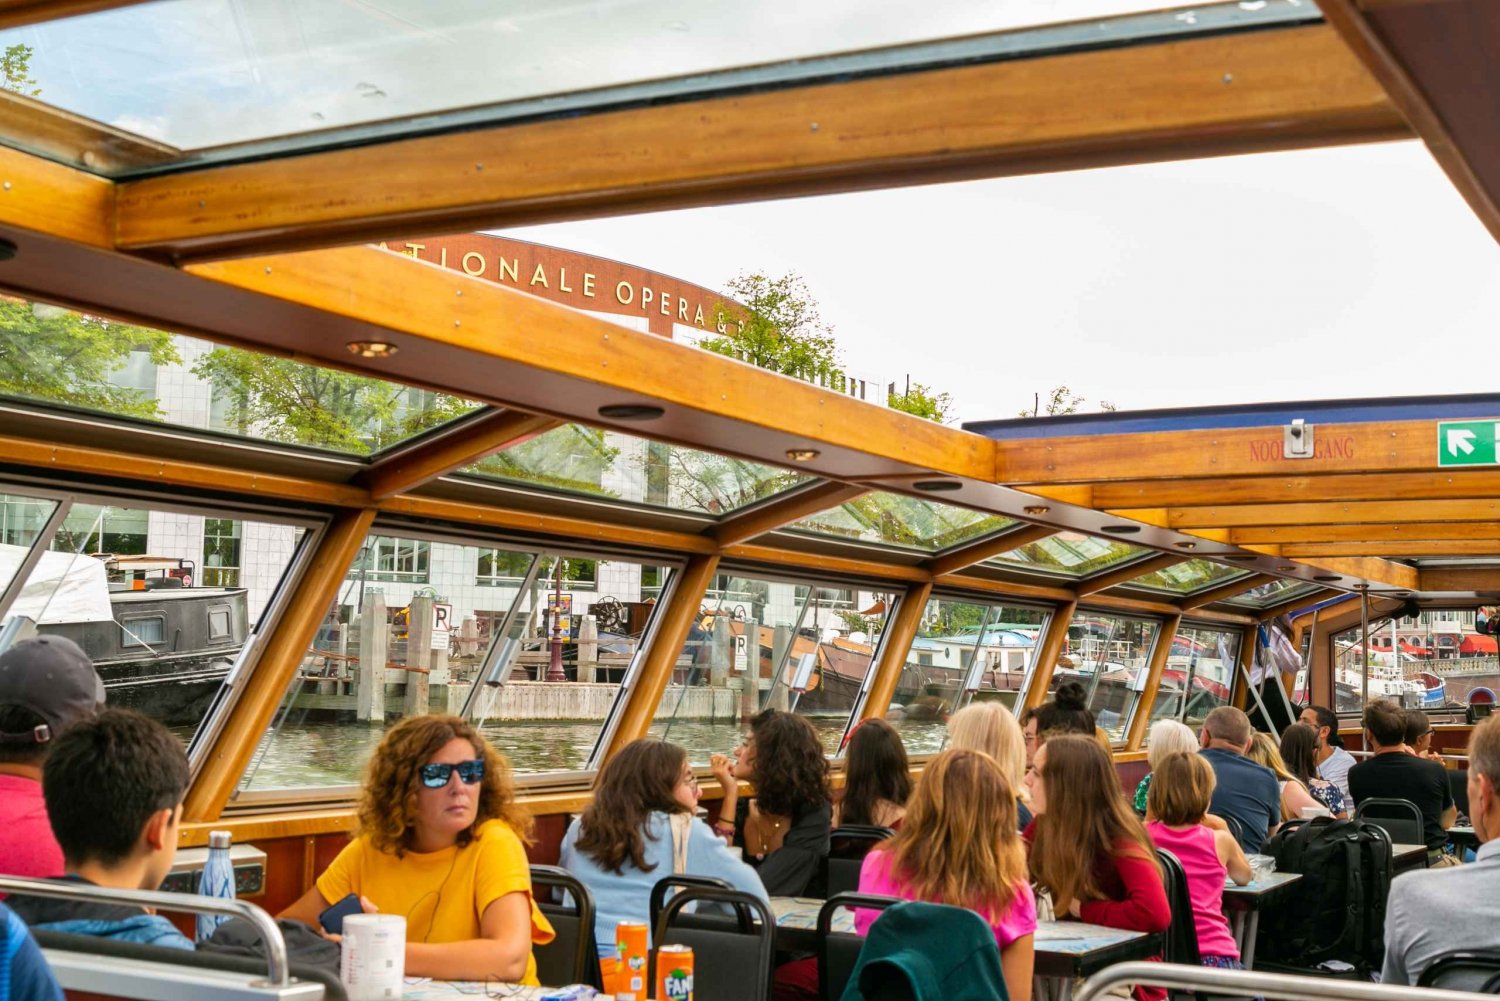 Amsterdam: City Canal Cruise